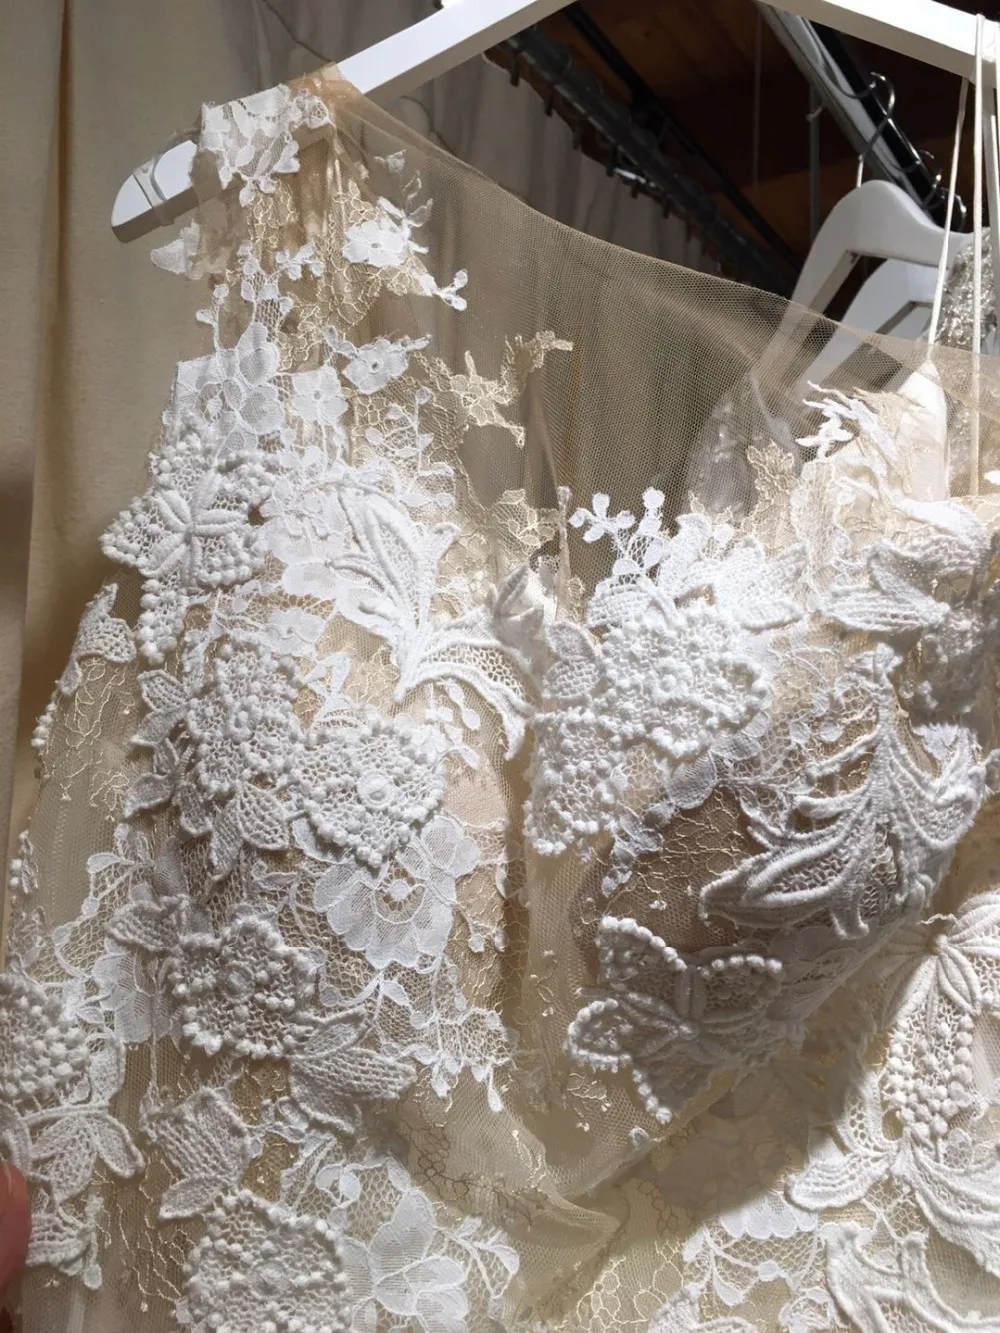 

3 Yards High Quality Chantilly Eyelash Bridal Lace Fabric in Off White for Veils,Wedding Gown Acessories , Bridal Bolero